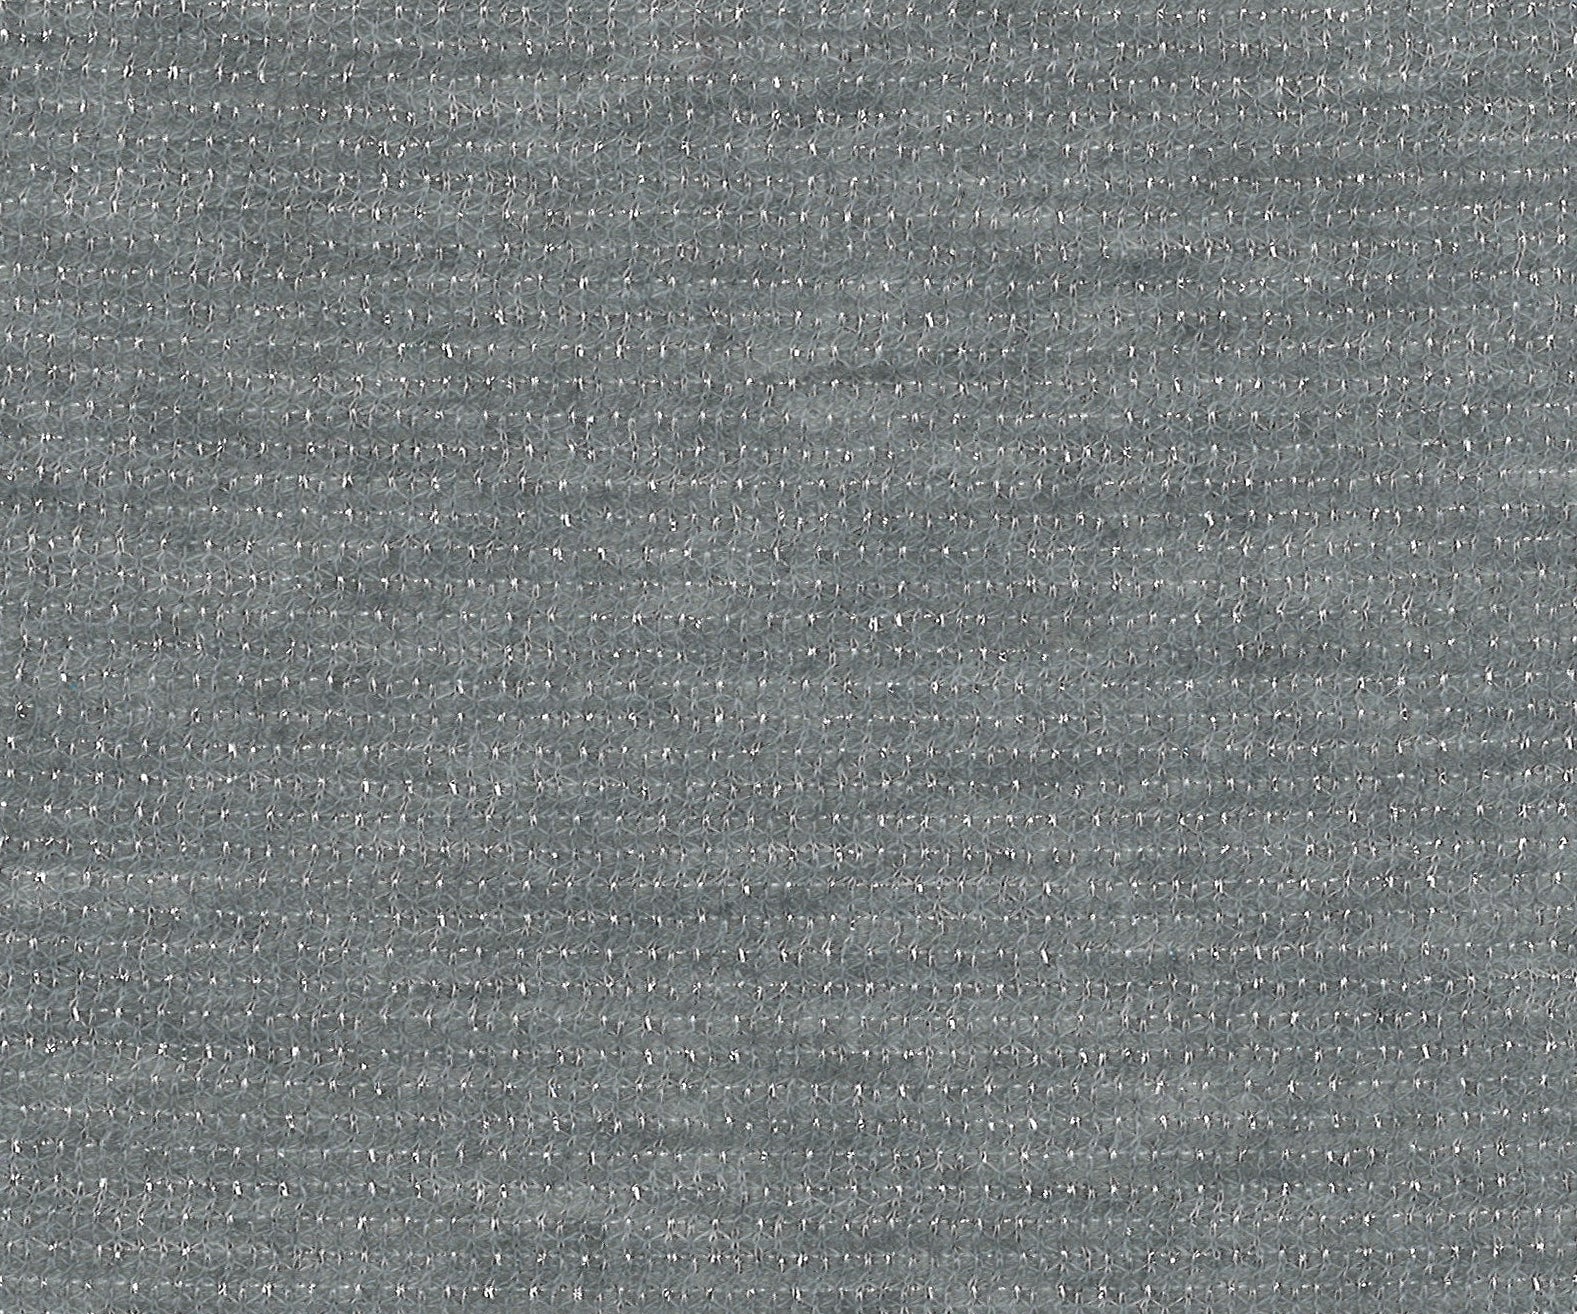 18009-01 56" 240g/yd Metallic Plain Dyed Blend Knit blend knit metallic plain dyed polyester silver Metallic - knit fabric - woven fabric - fabric company - fabric wholesale - fabric b2b - fabric factory - high quality fabric - hong kong fabric - fabric hk - acetate fabric - cotton fabric - linen fabric - metallic fabric - nylon fabric - polyester fabric - spandex fabric - chun wing hing - cwh hk - fabric worldwide ship - 針織布 - 梳織布 - 布料公司- 布料批發 - 香港布料 - 秦榮興